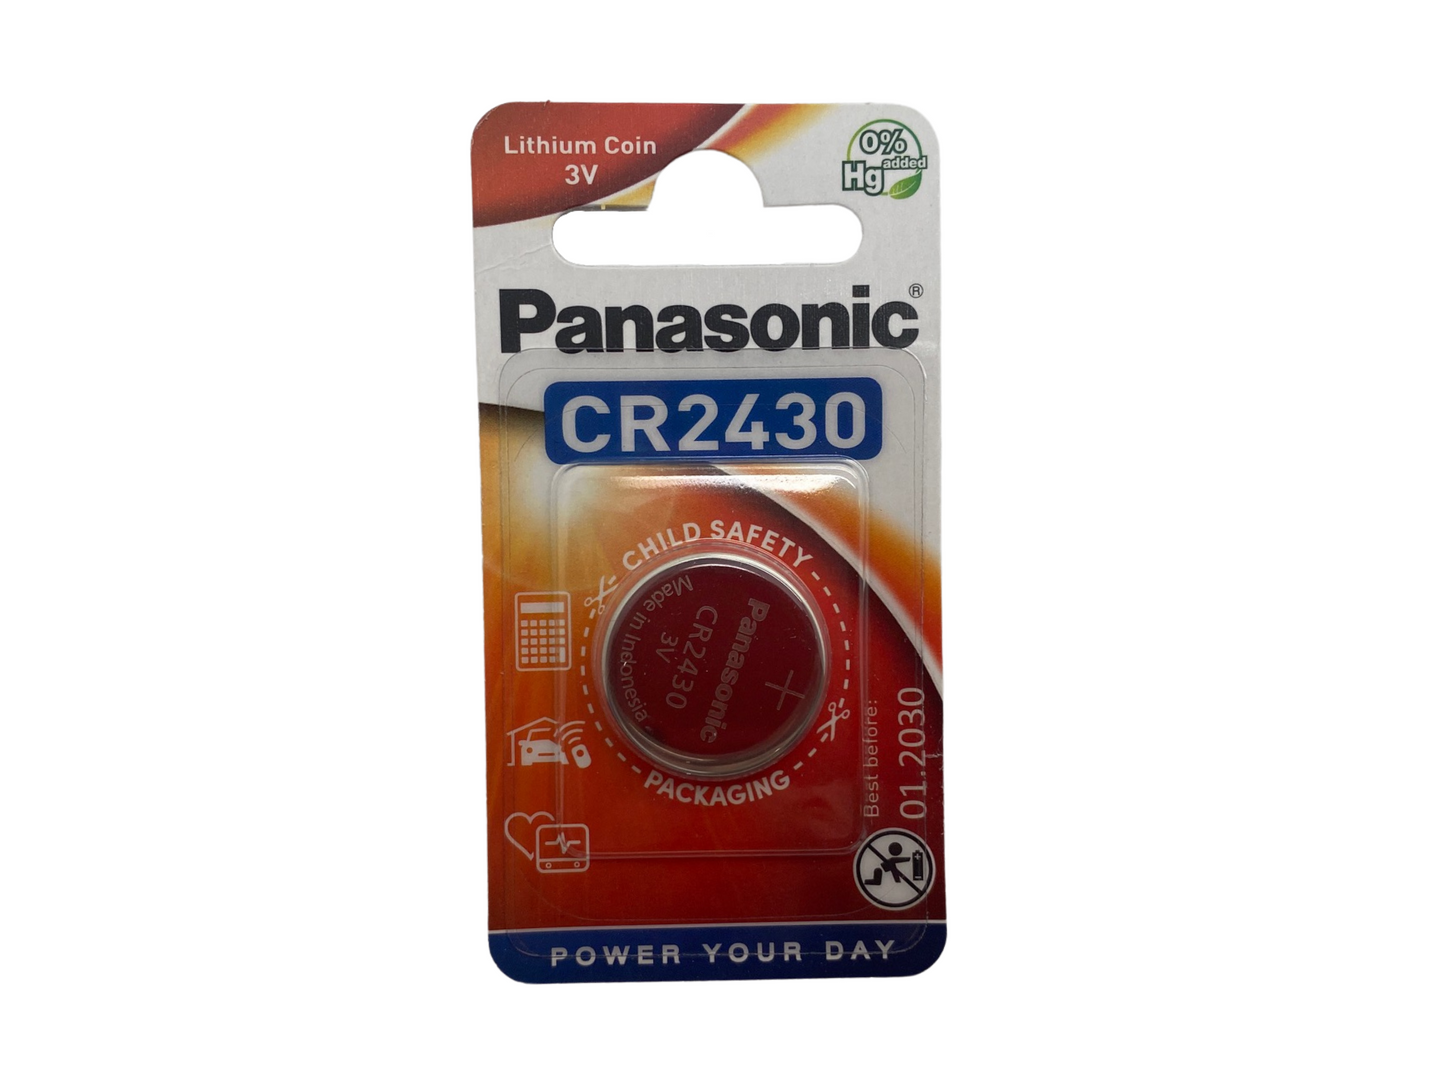 Panasonic CR2430 Lithium Cell battery